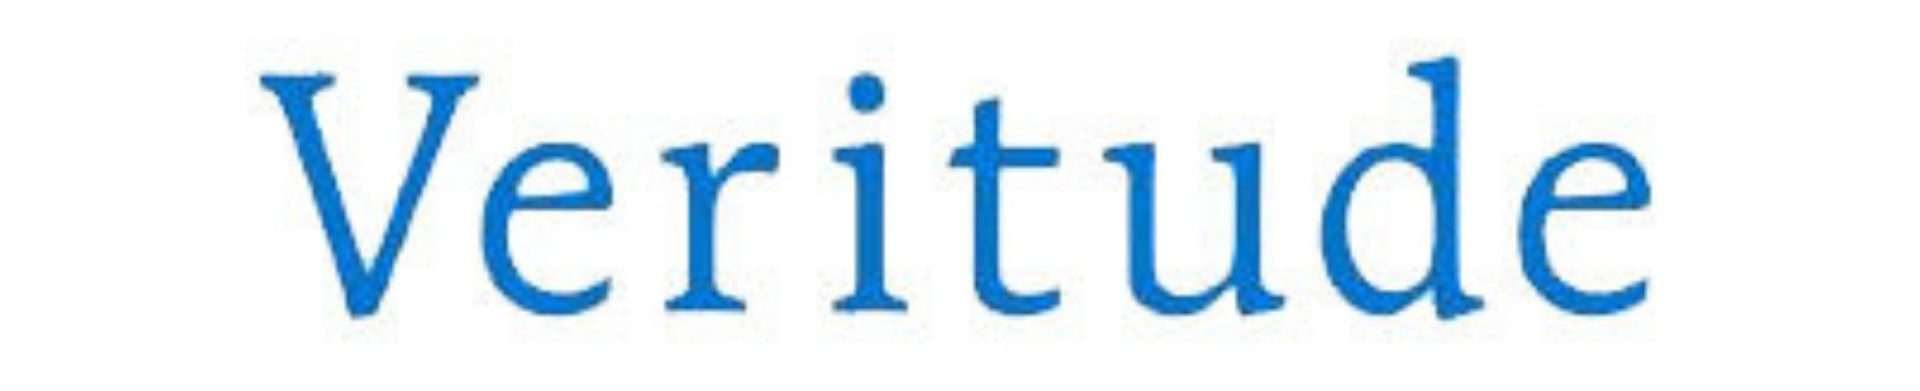 Veritude of Fidelity TalentSource logo blue on white